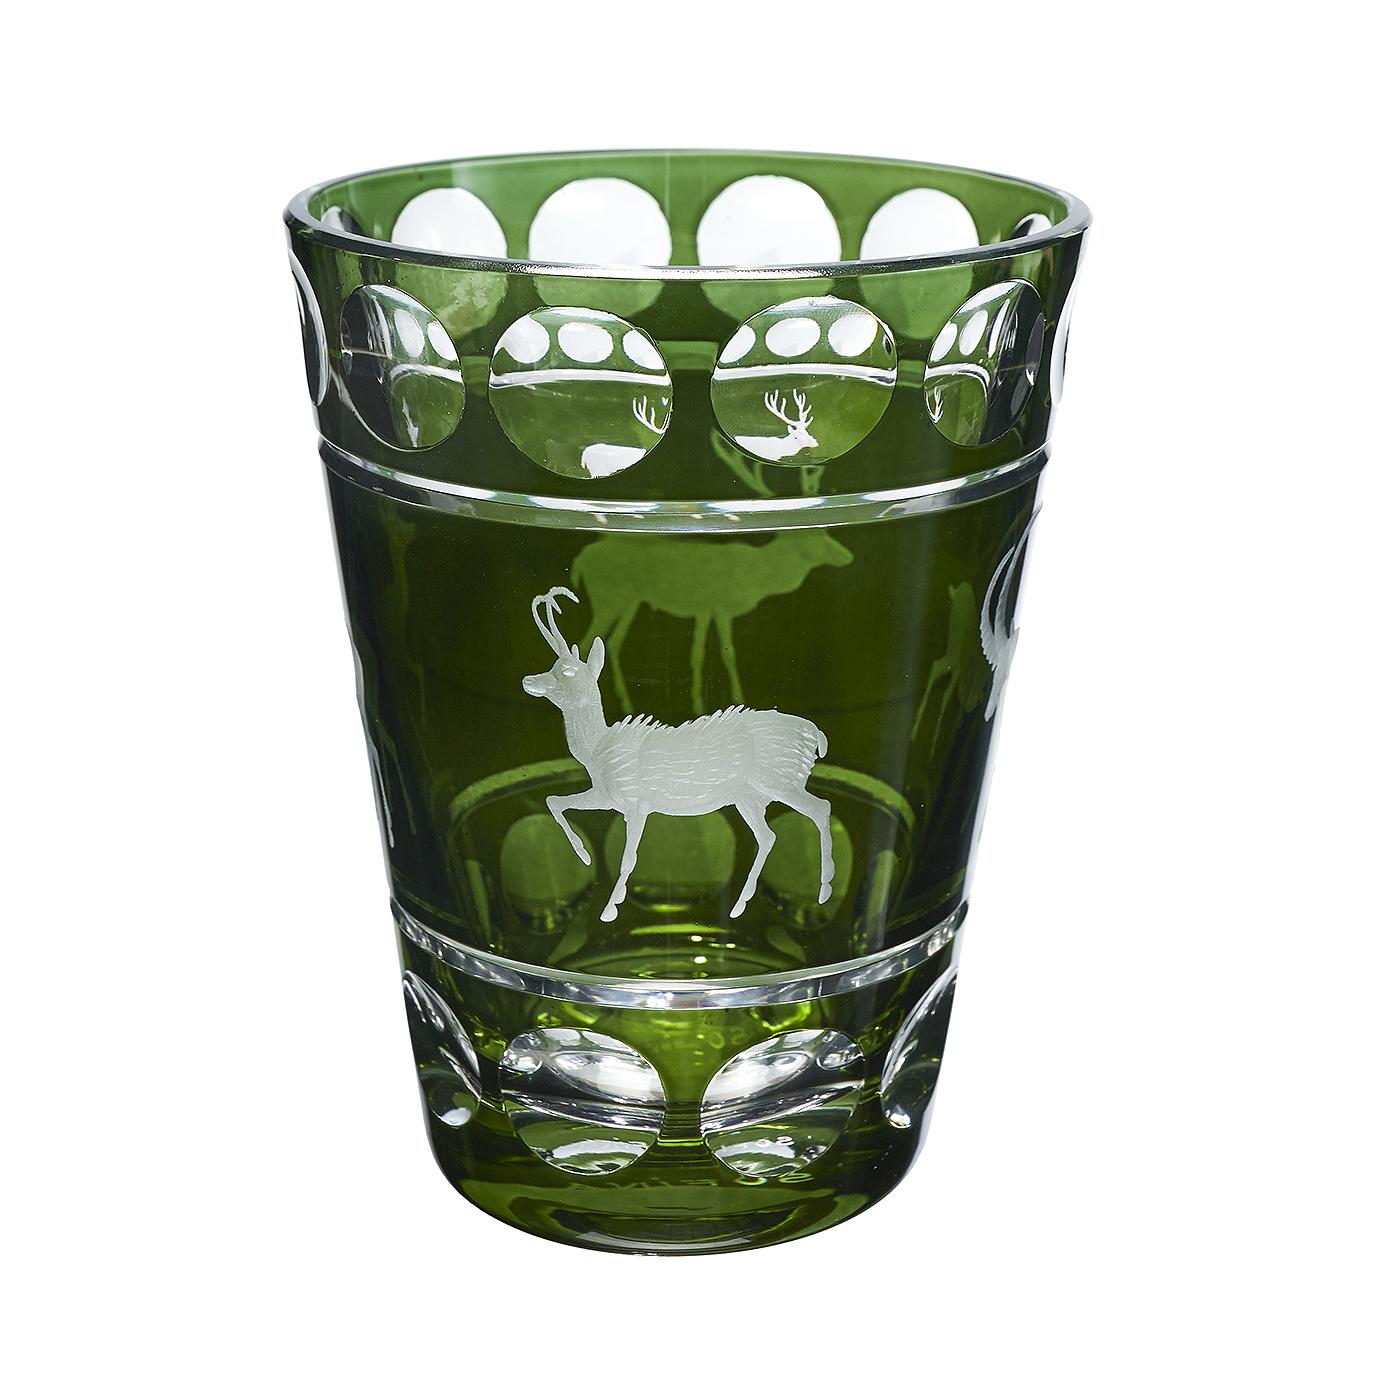 German Black Forest Vase Green Crystal with Hunting Decor Sofina Boutique Kitzbuehel For Sale